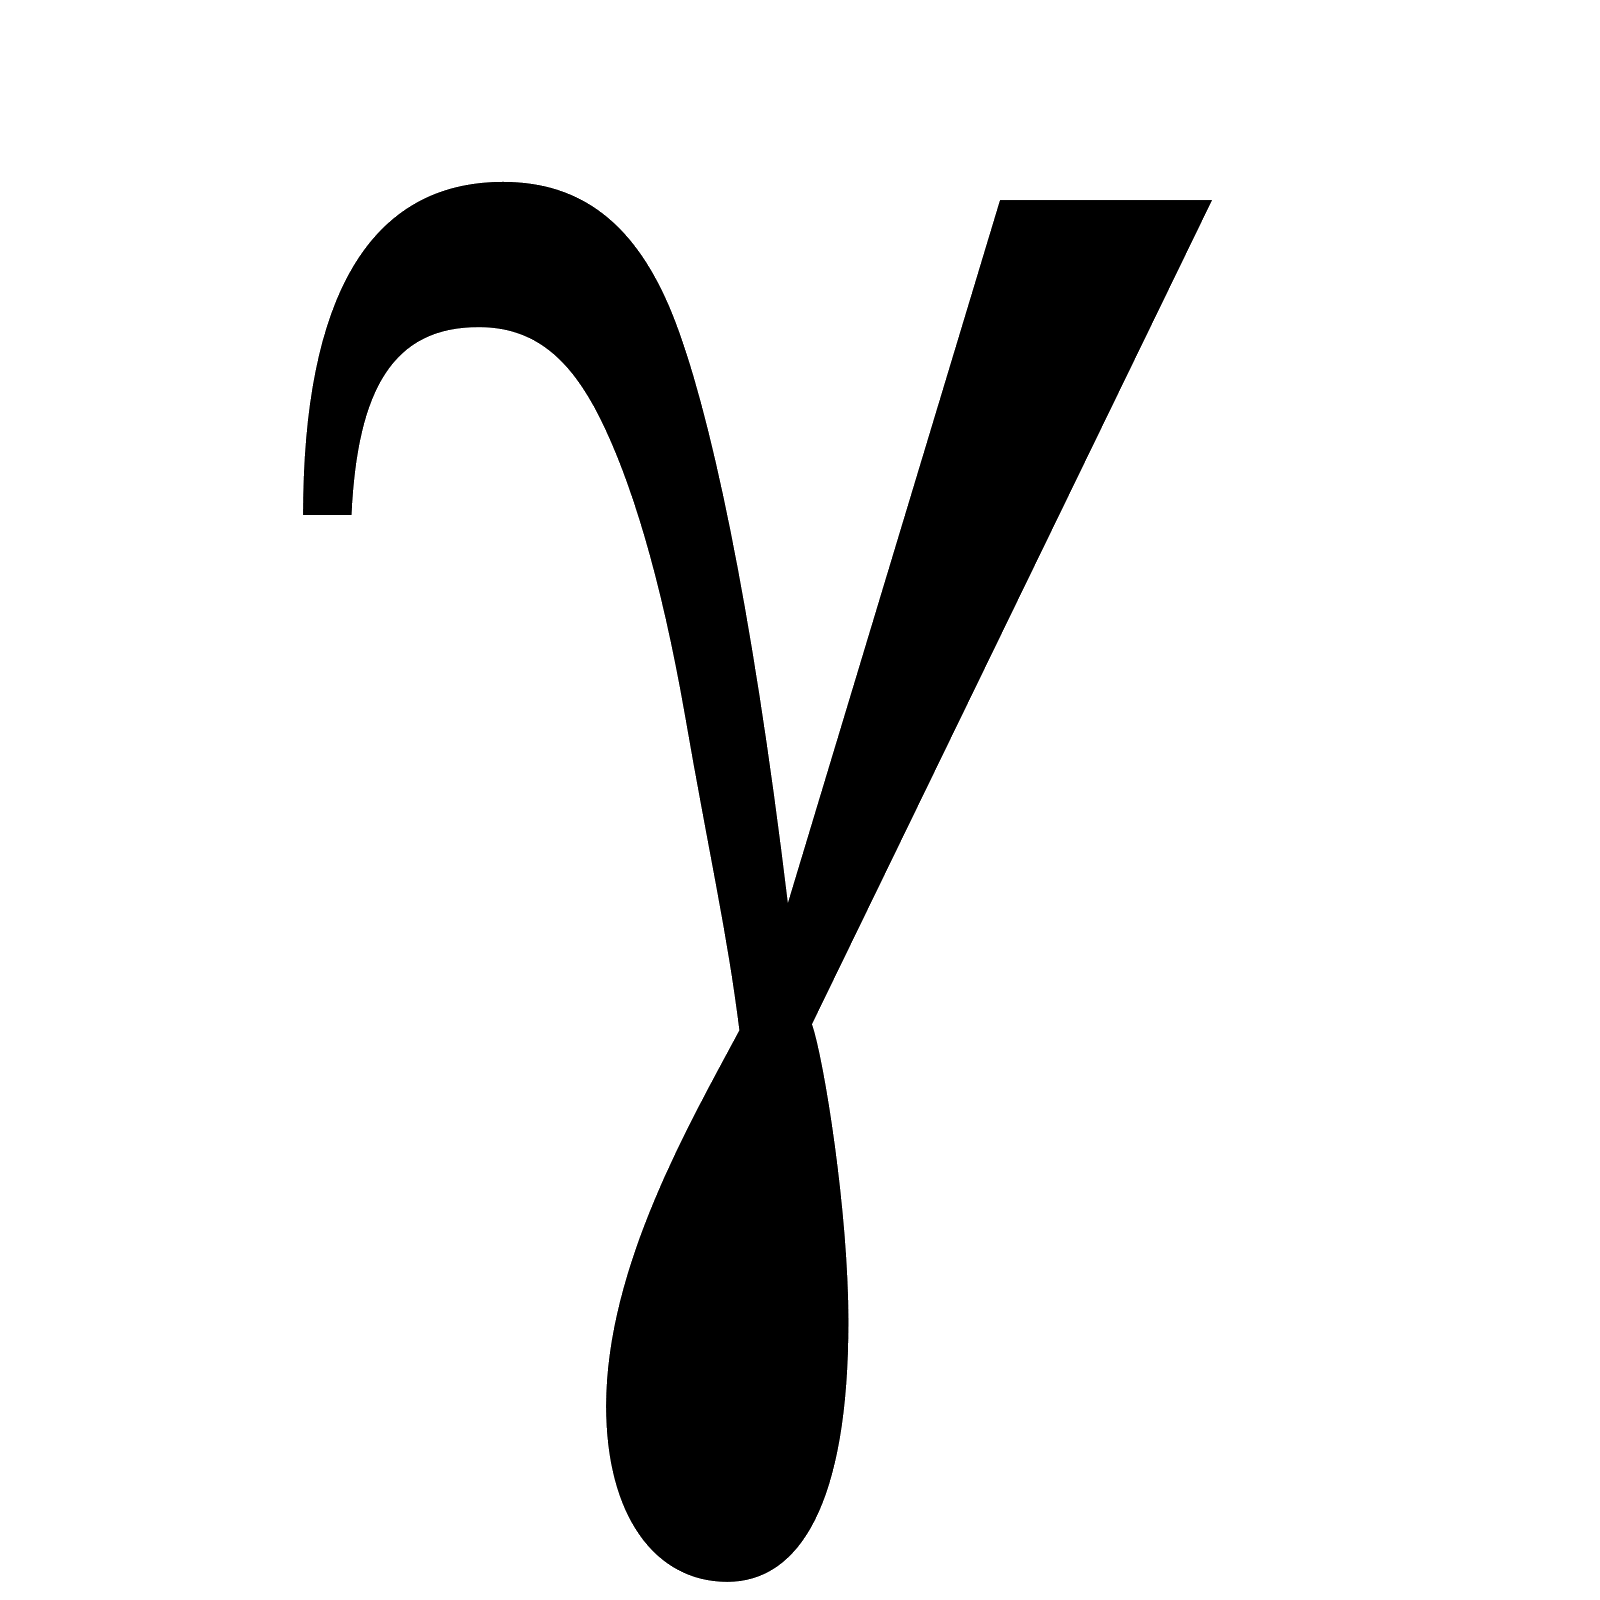 Gamma Greek letter icon, Gamma symbol in ancient Greek frame 